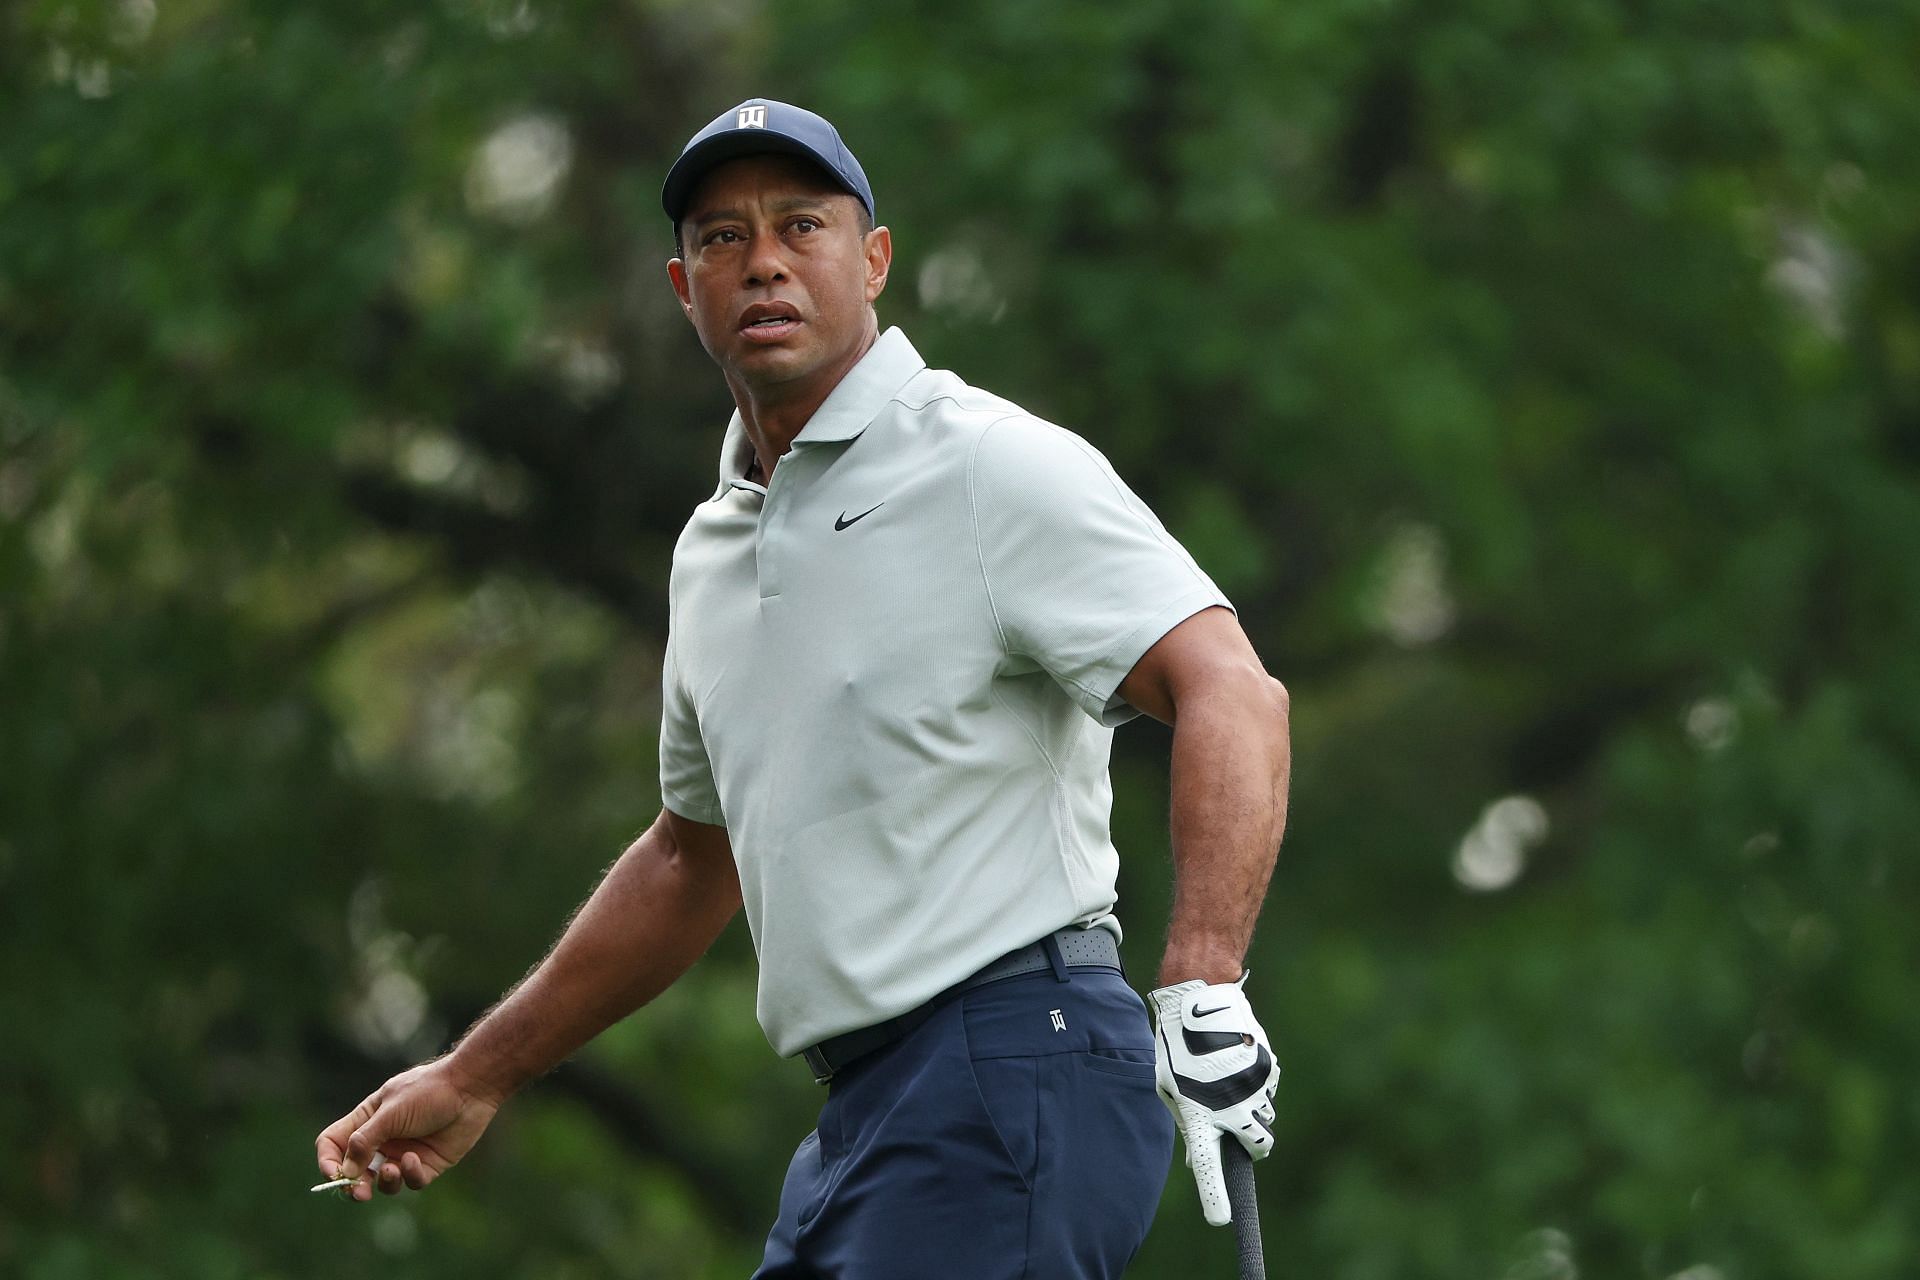 Tiger Woods will undergo rehabilitation next